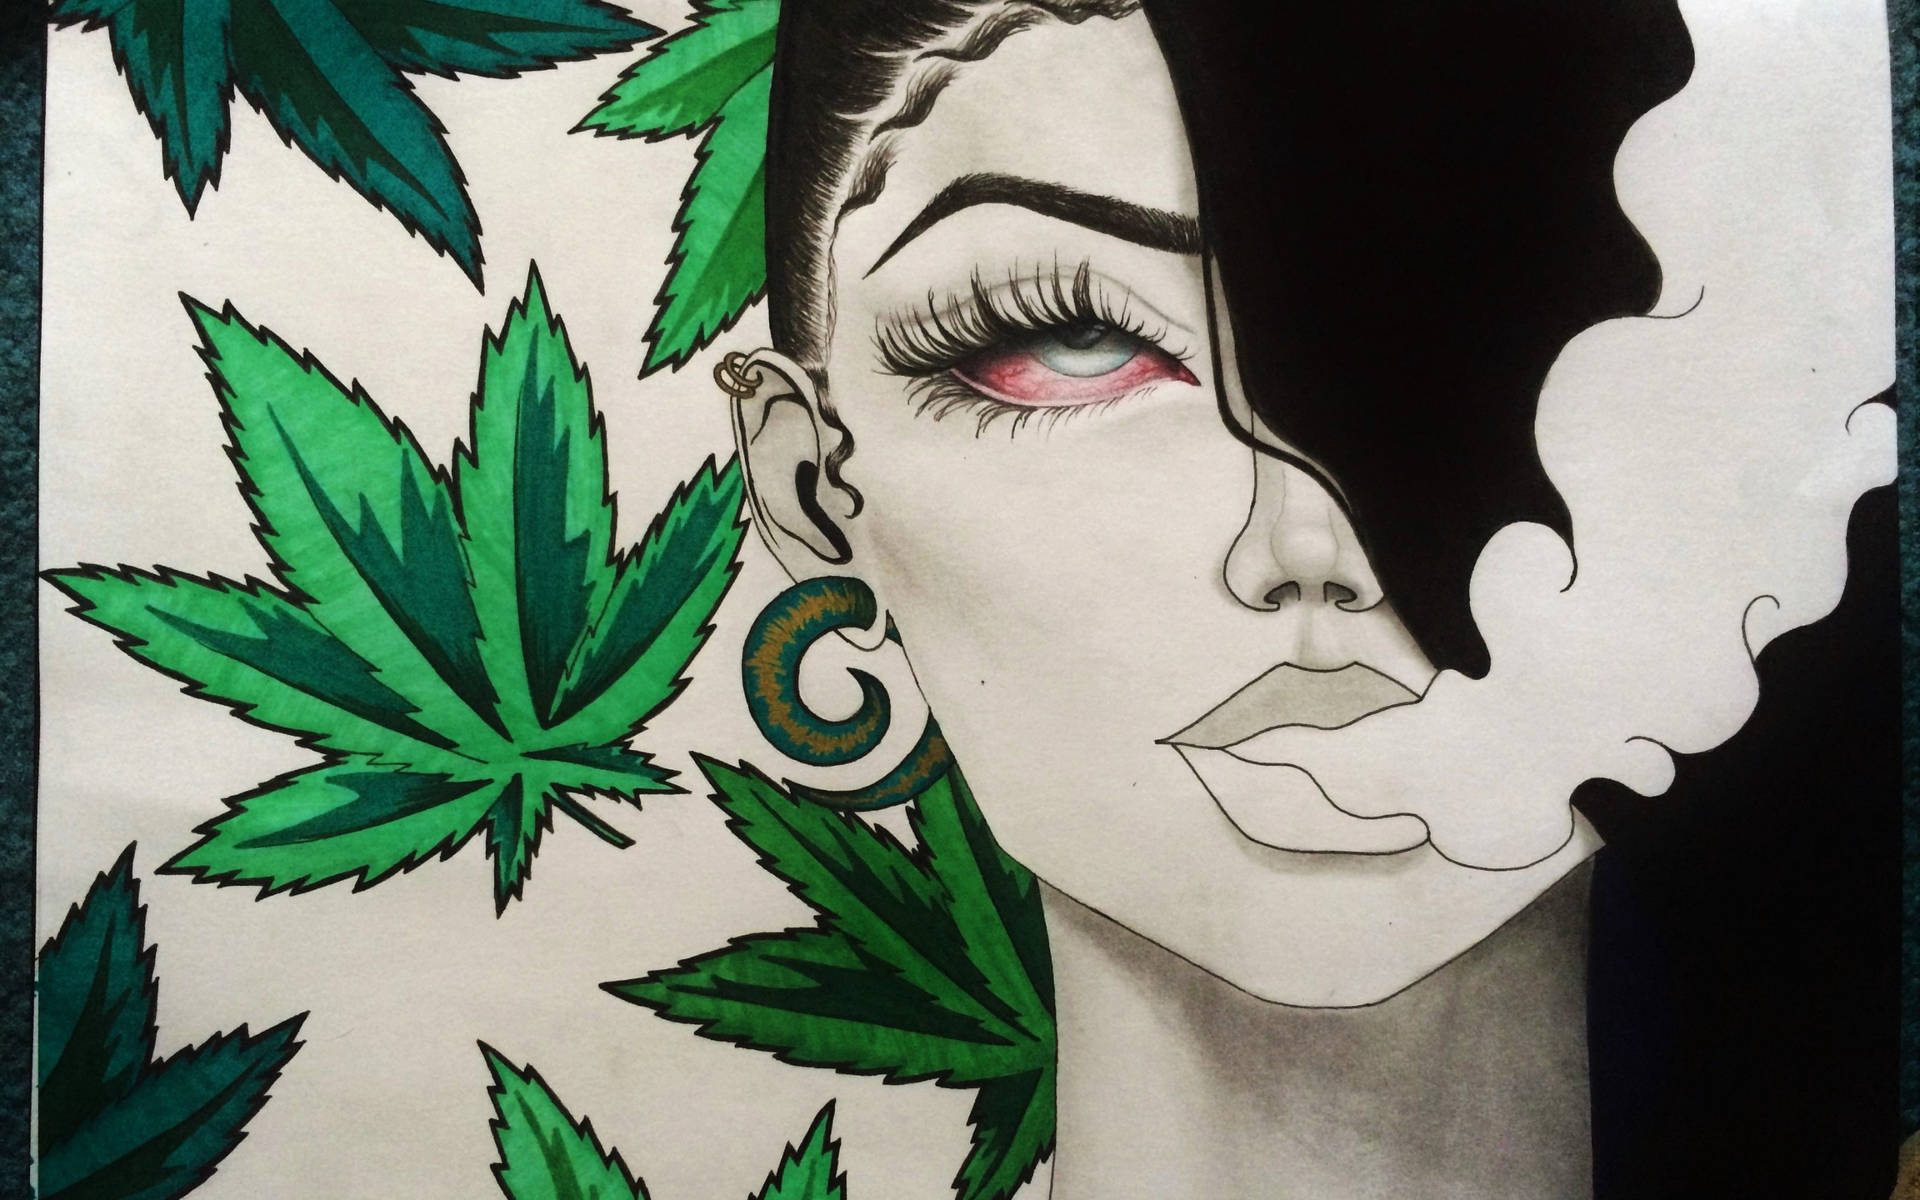 Smoking Weed Digital Art Background